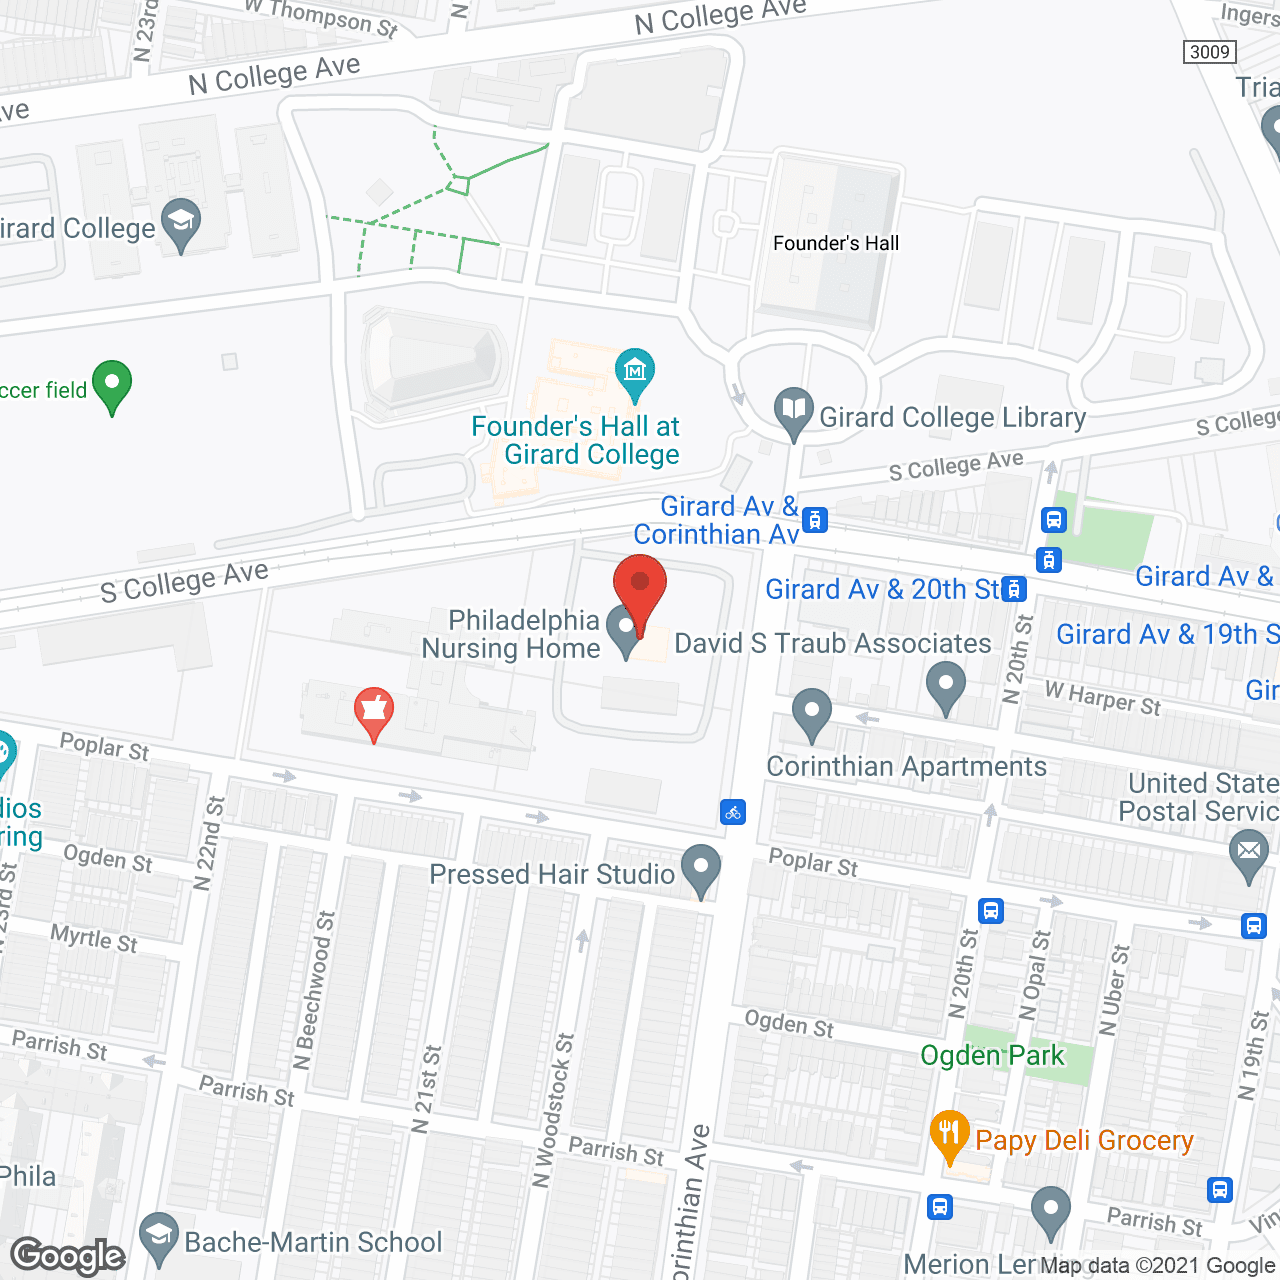 Philadelphia Nursing Home in google map